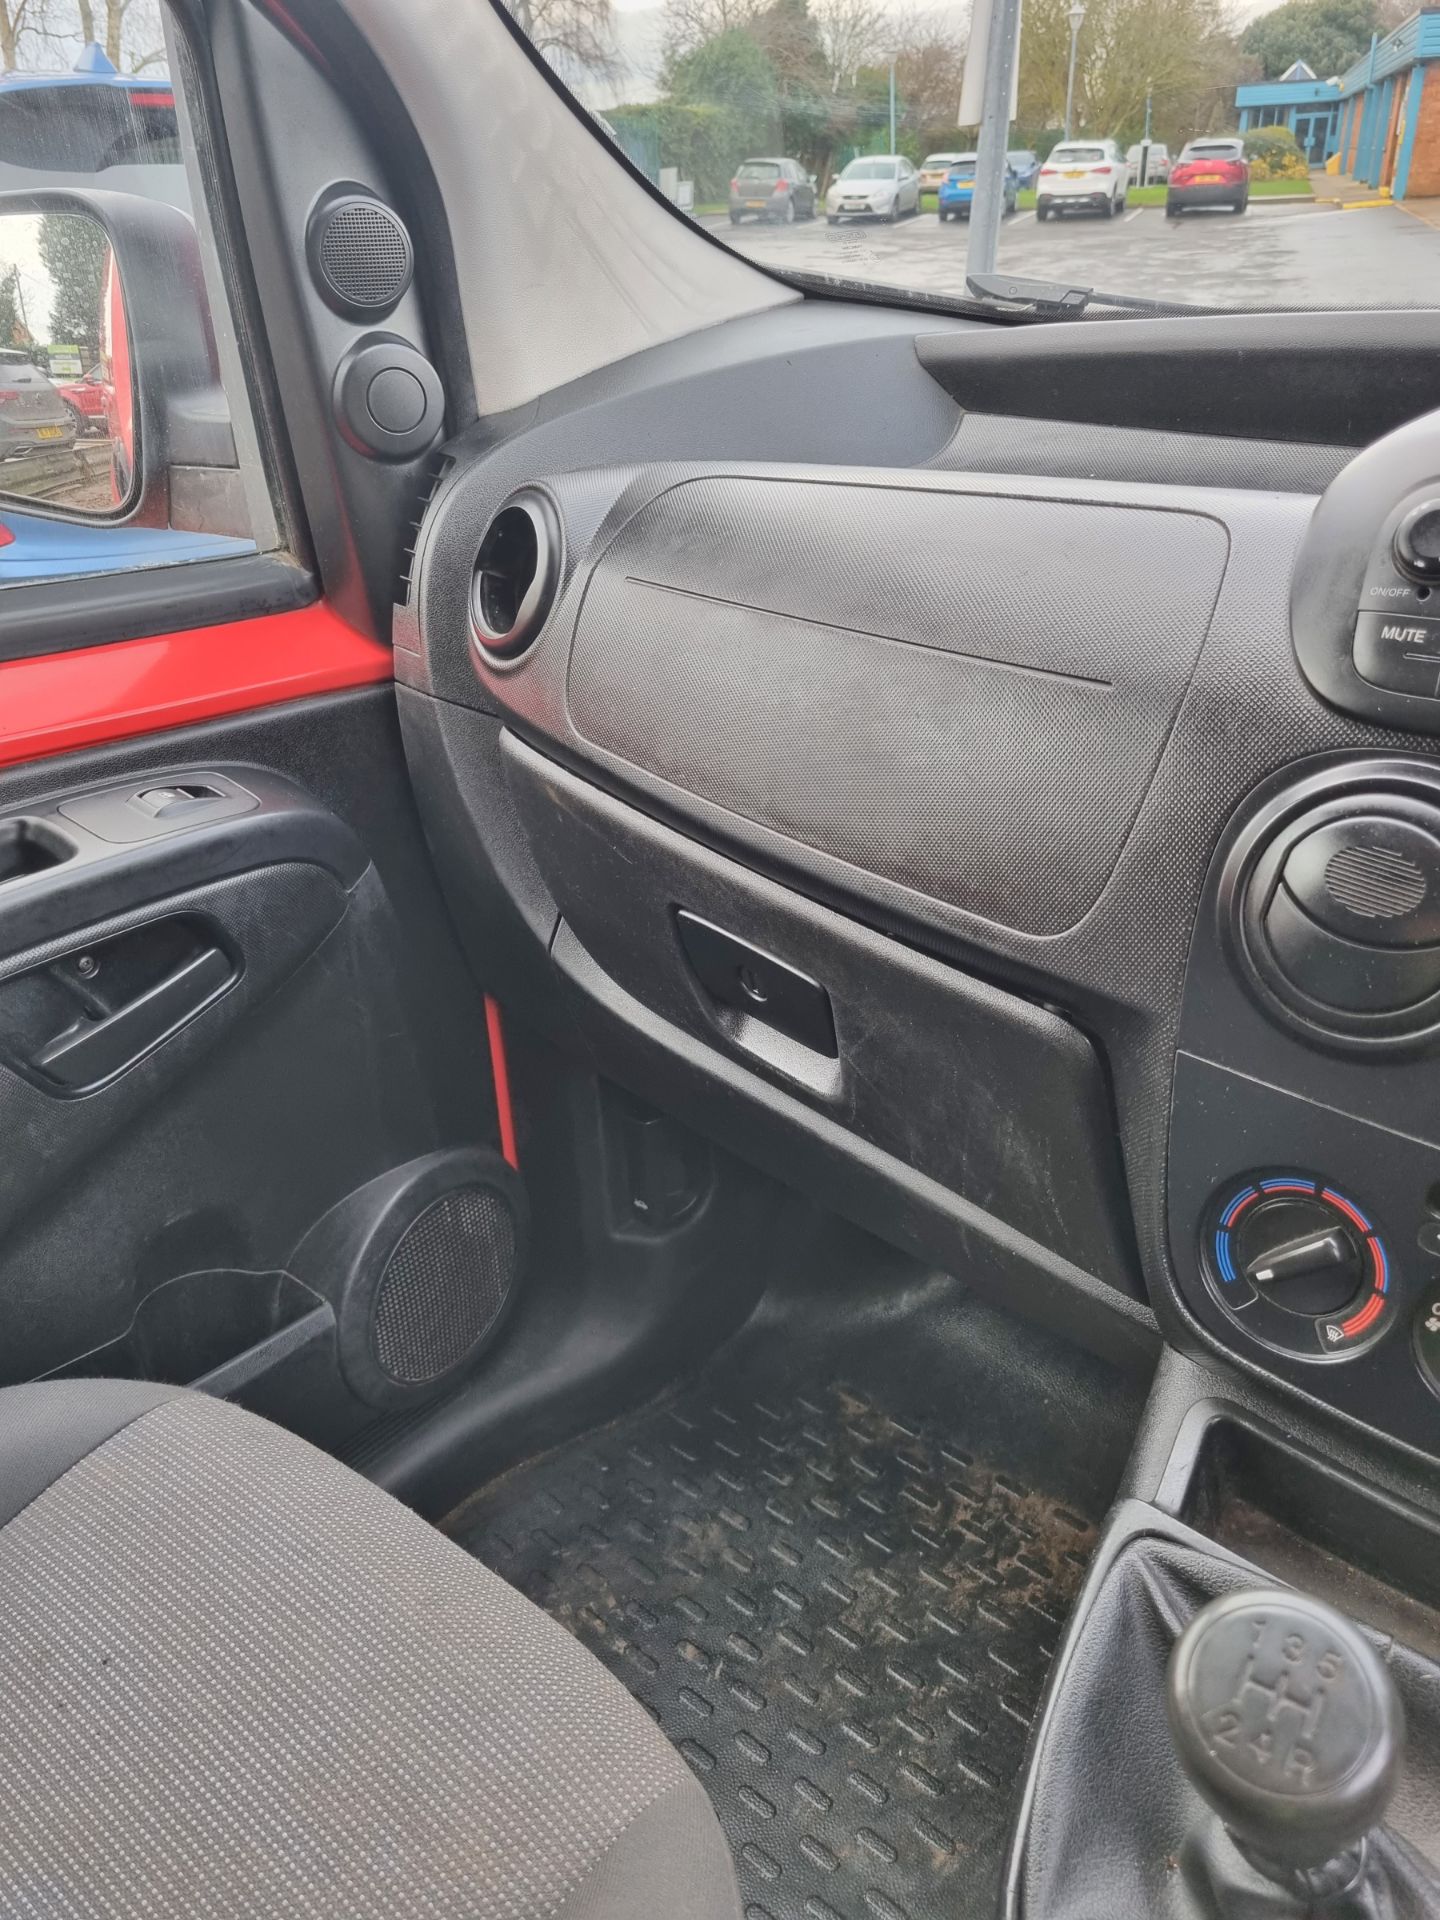 Peugeot Bipper S HDI 1.4L panel van - 81,716 miles - red - 2 seats - LGV for tax - 2011 plate - Bild 13 aus 34